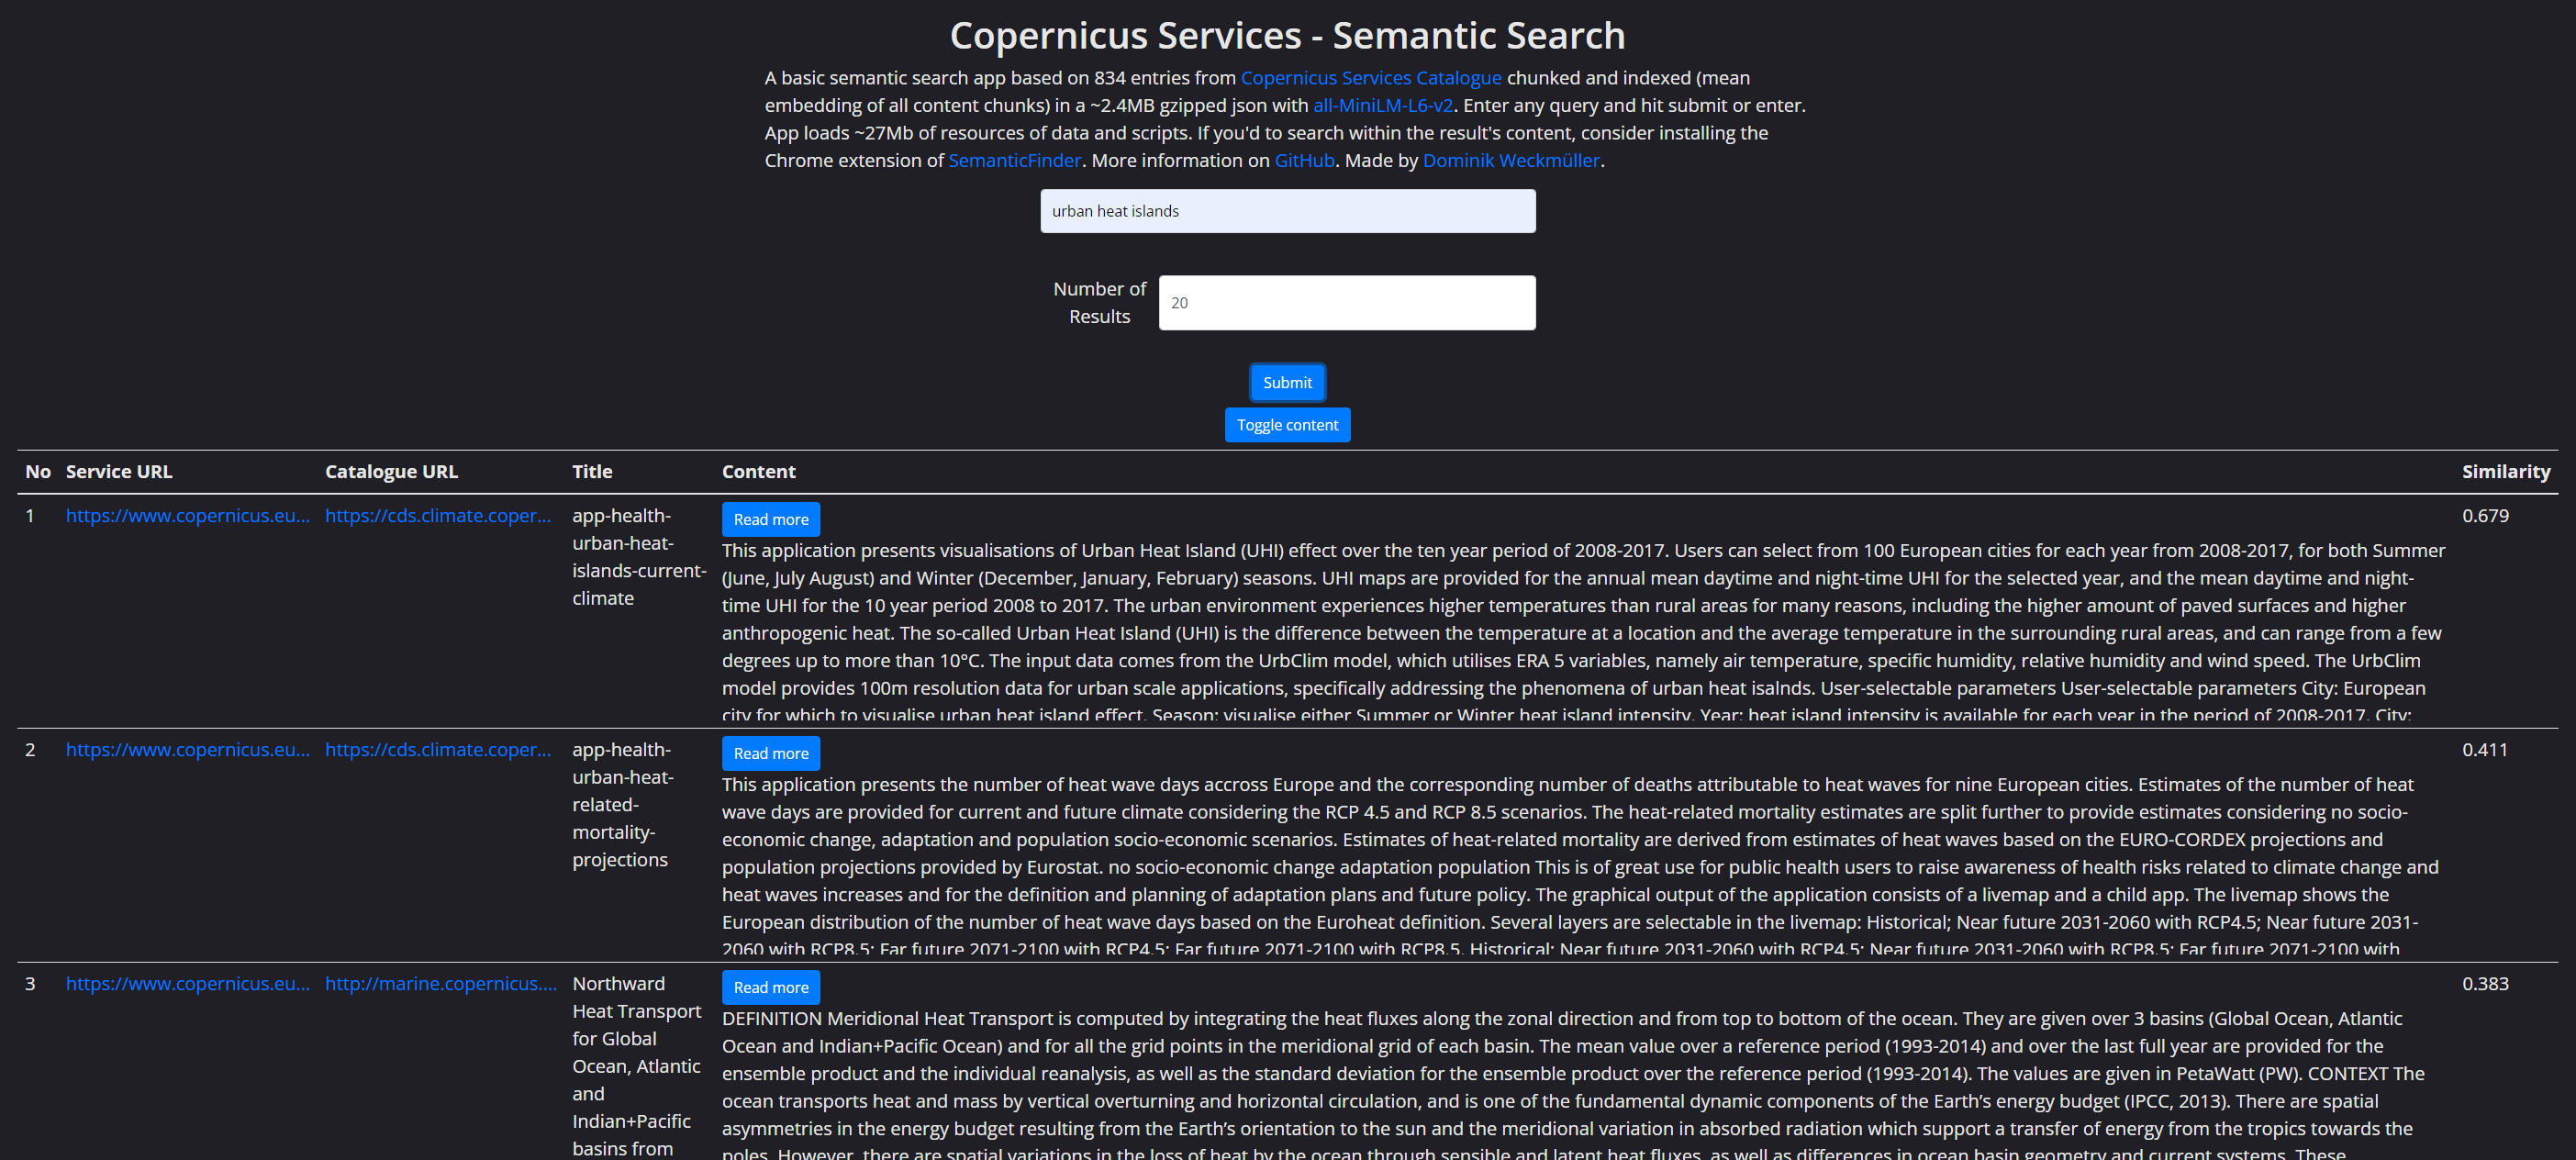 Copernicus Services Semantic Search App Interface in Dark Mode